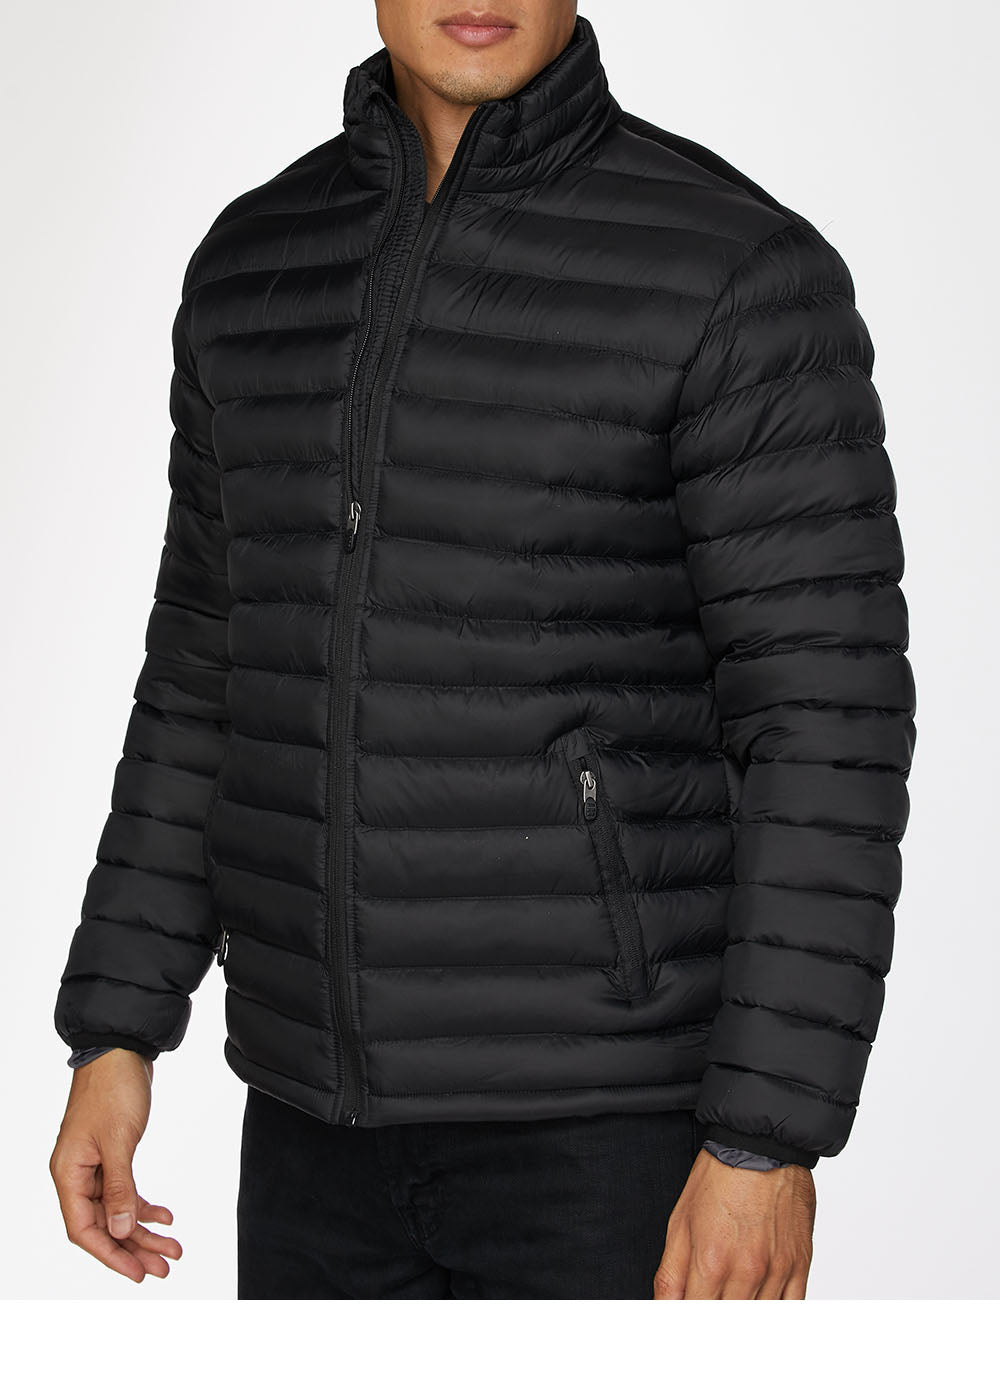 Men's Nylon Quilted Puffer Jacket -NJ640-Black